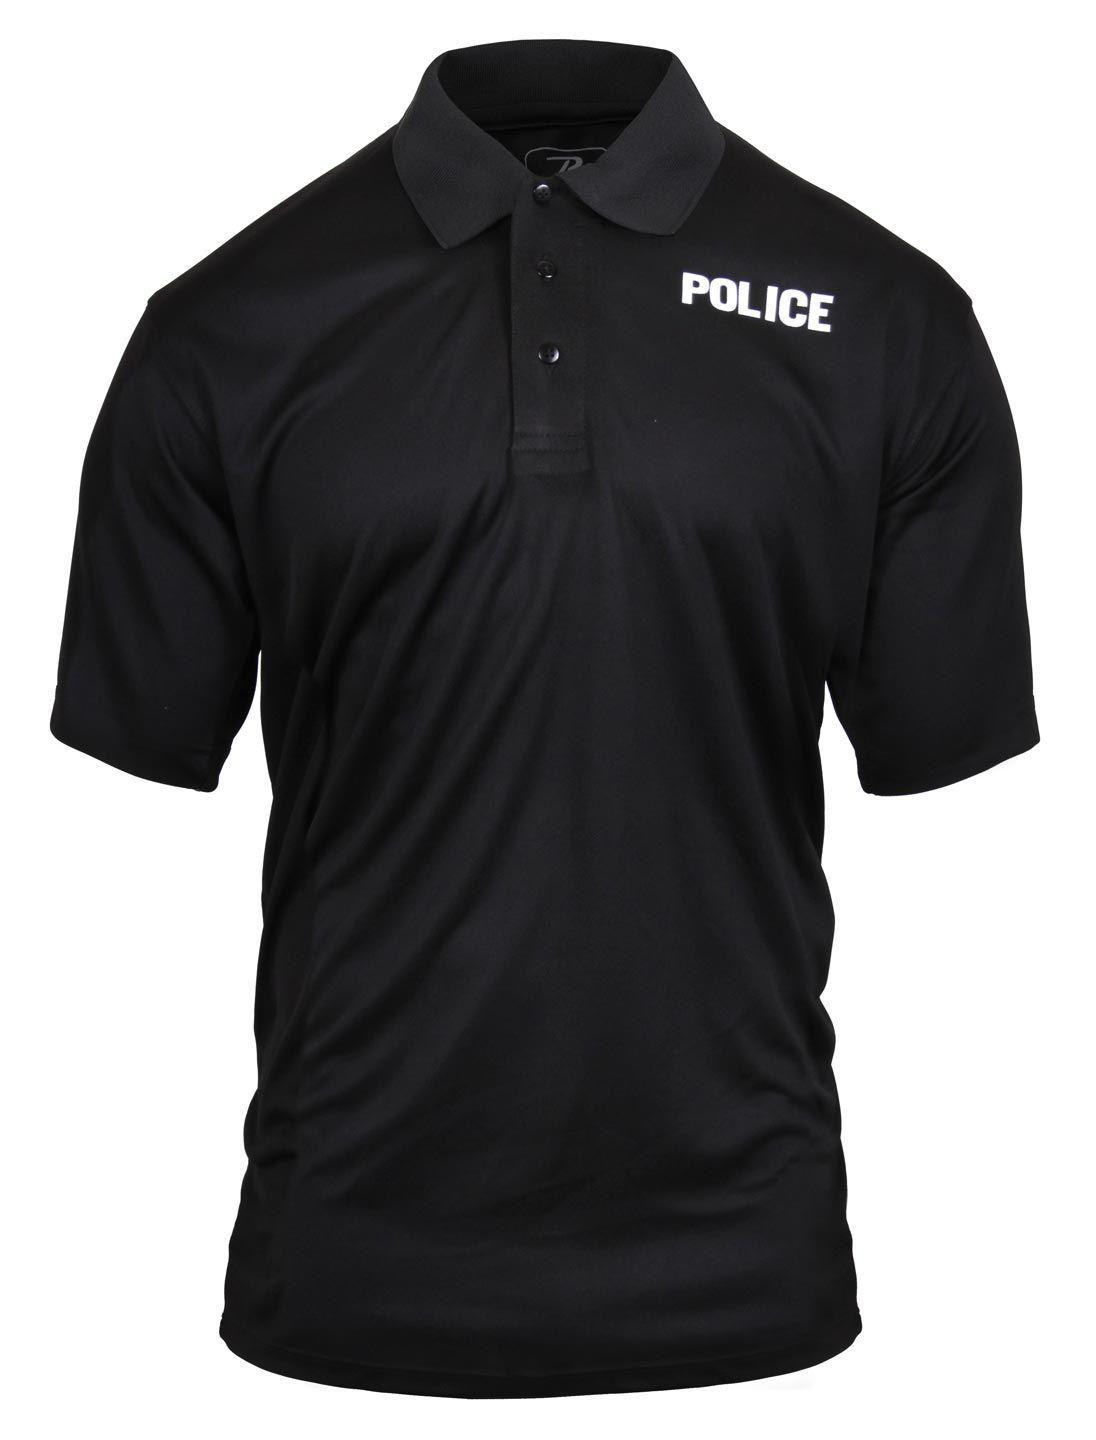 #3 - Rothco Svedtransporterende Polo T-shirt (Black / Police, XL)